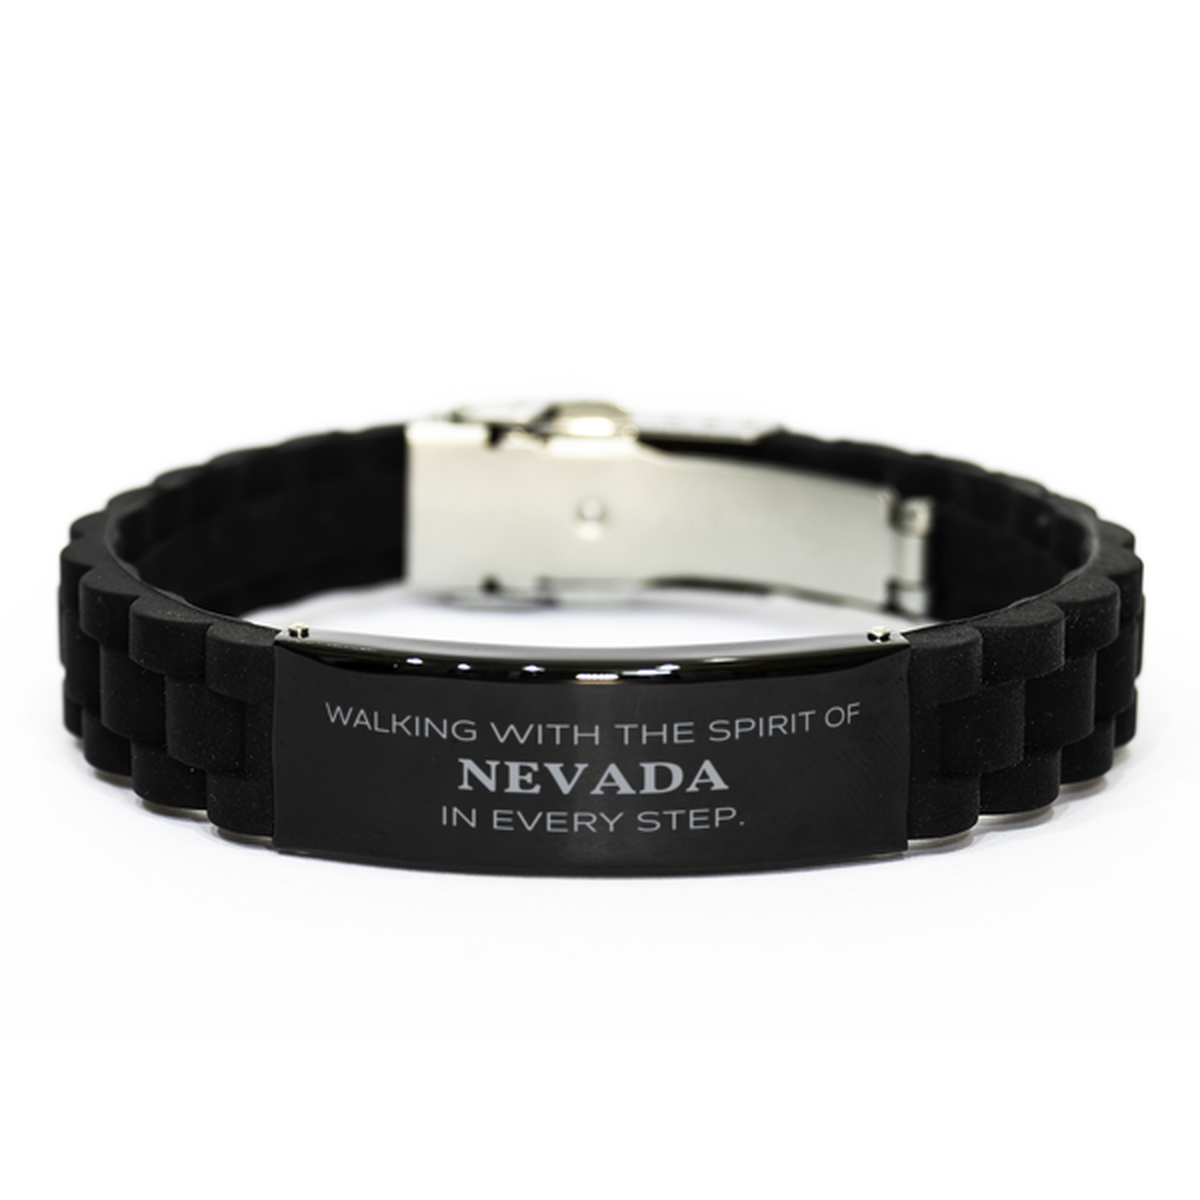 Nevada Gifts, Walking with the spirit, Love Nevada Birthday Christmas Black Glidelock Clasp Bracelet For Nevada People, Men, Women, Friends